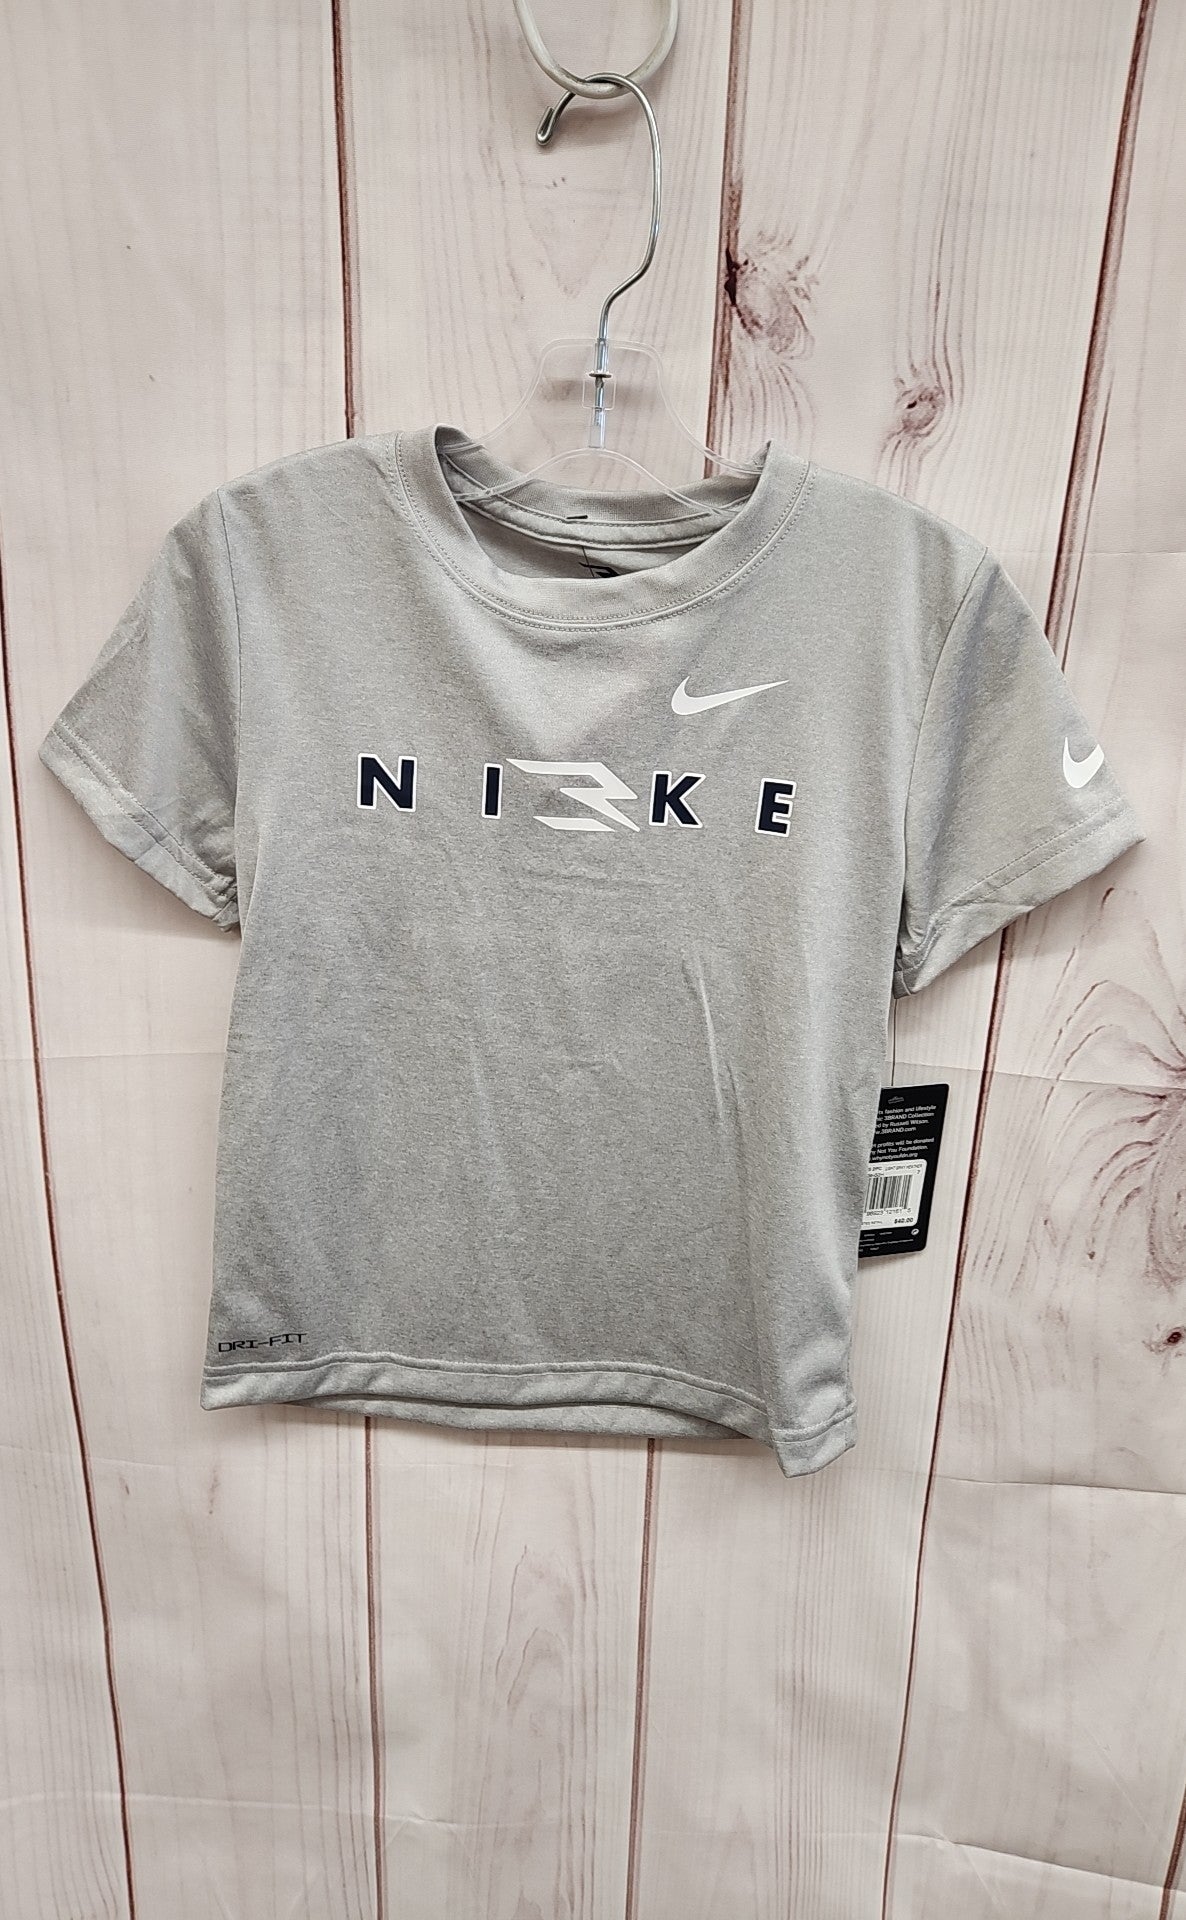 Nike Boy's Size 7 Gray Shirt